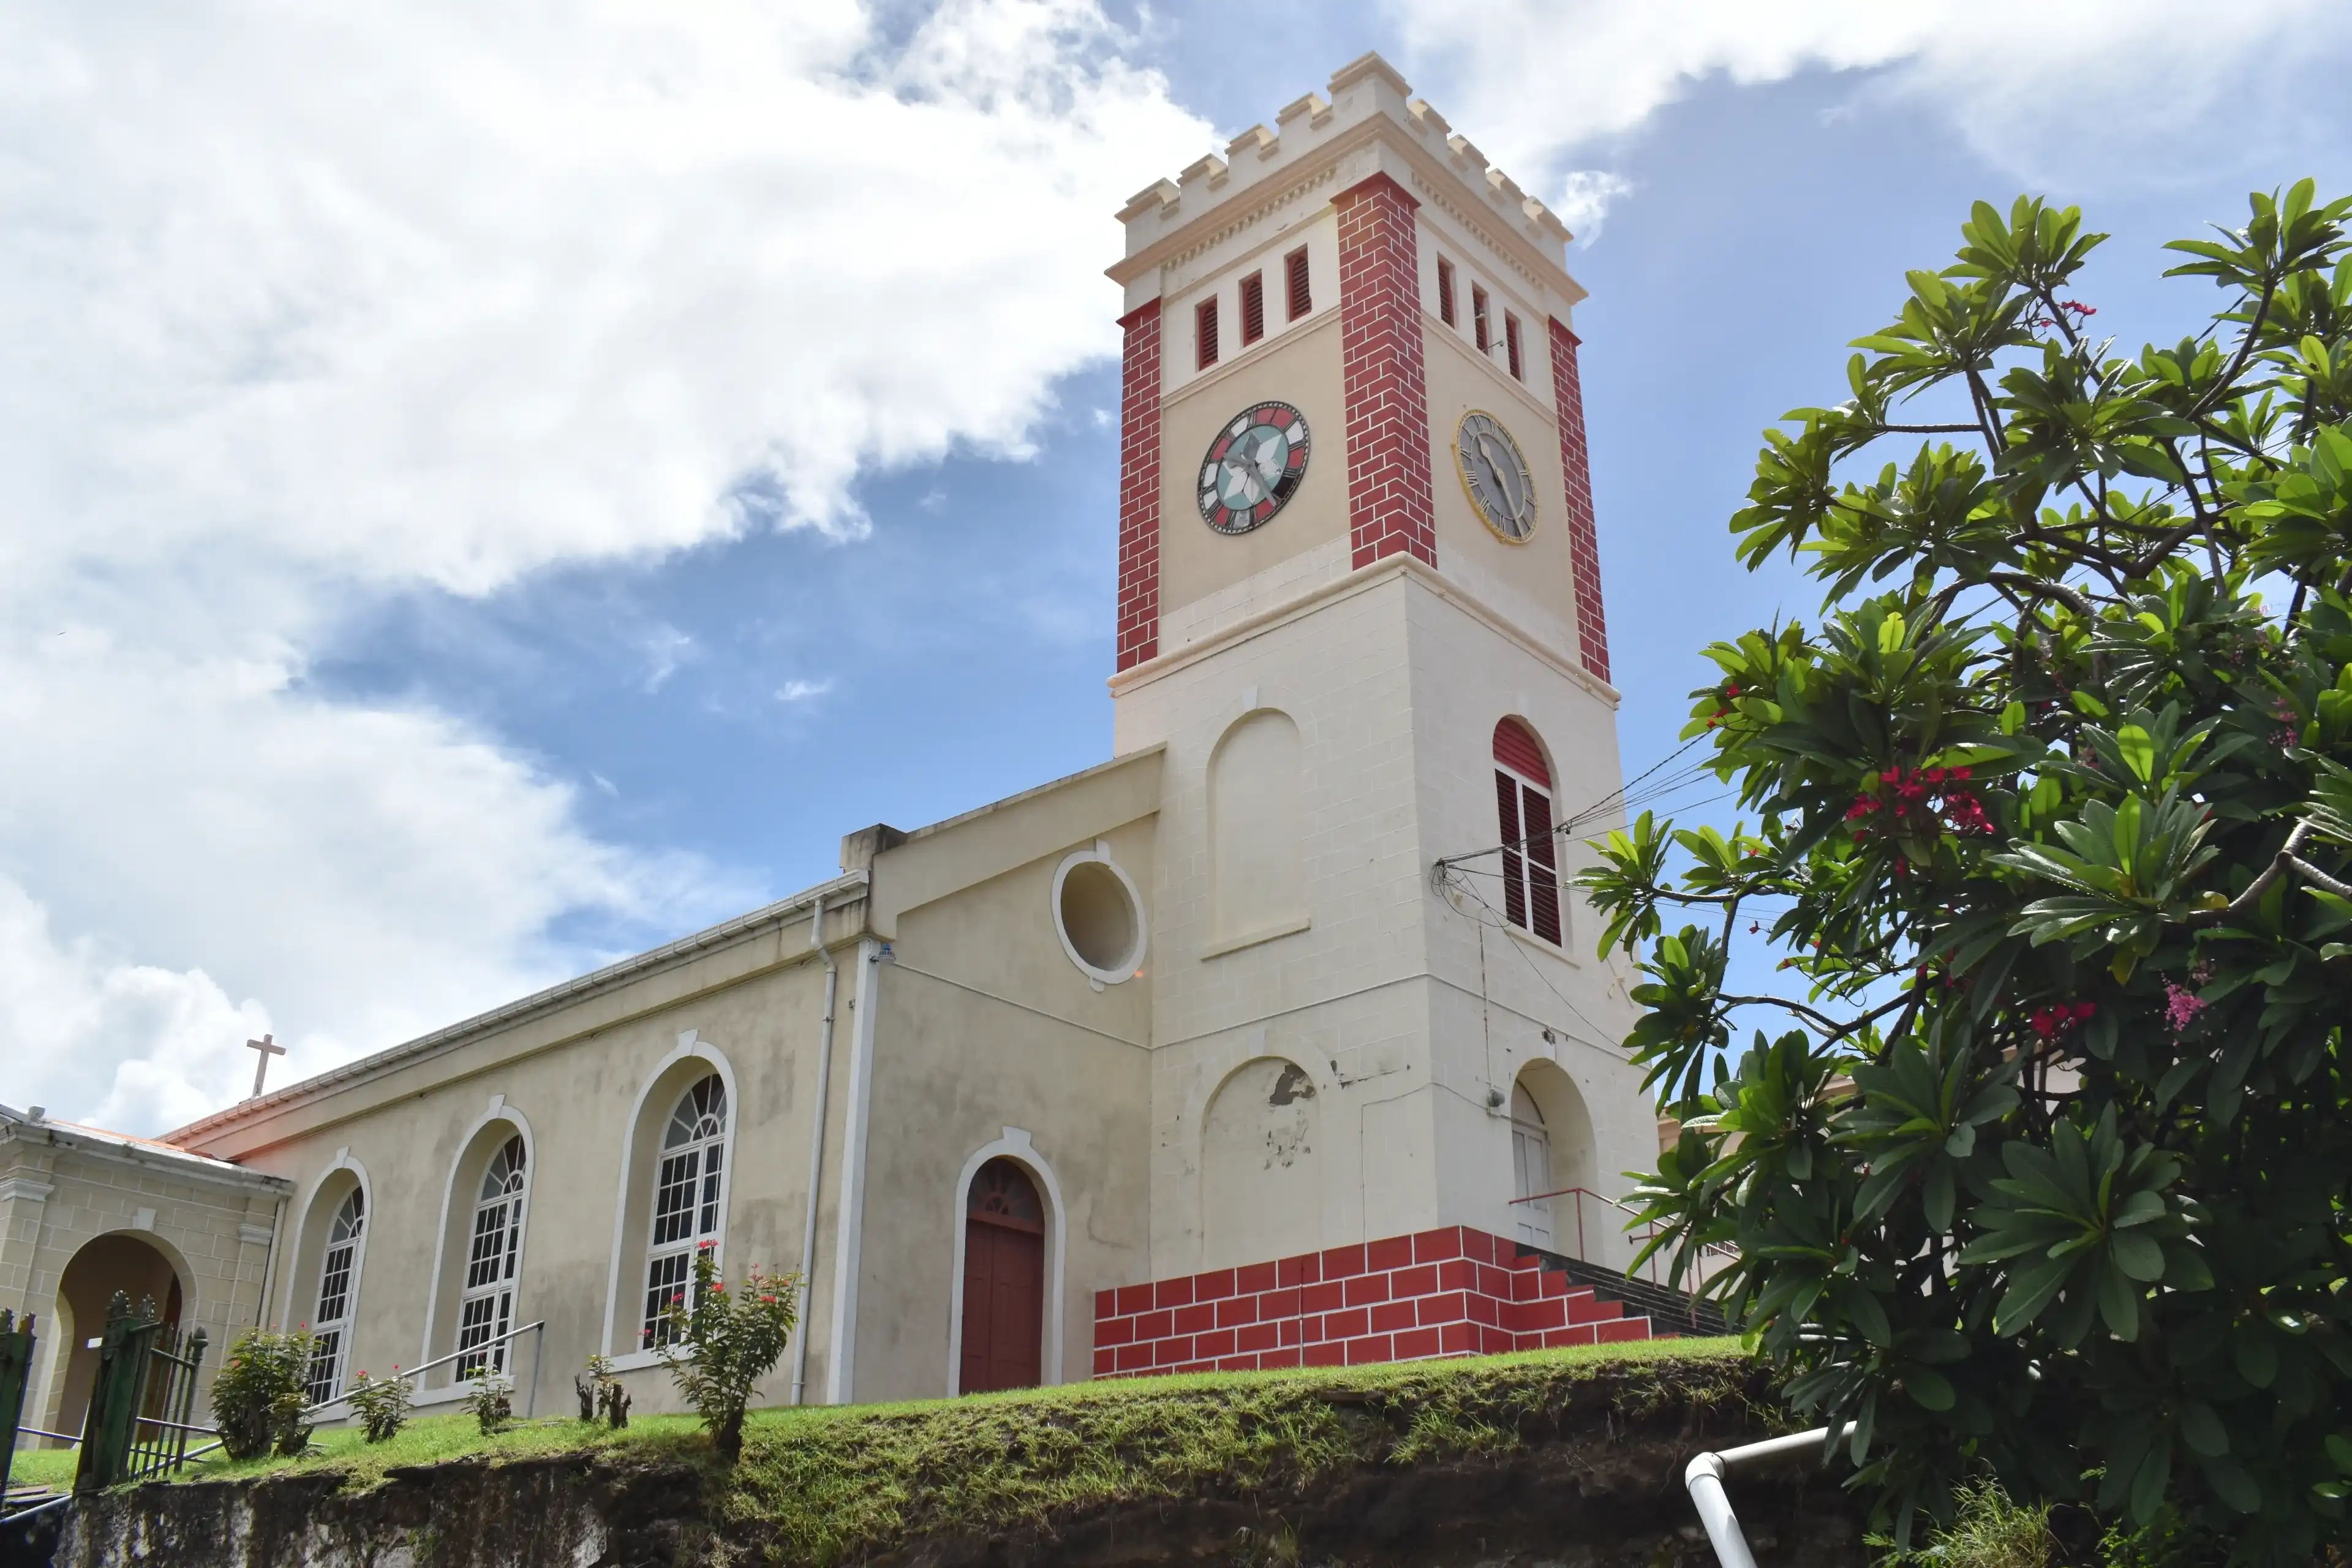 Best Saint George's hotels. Cheap hotels in Saint George's, Grenada